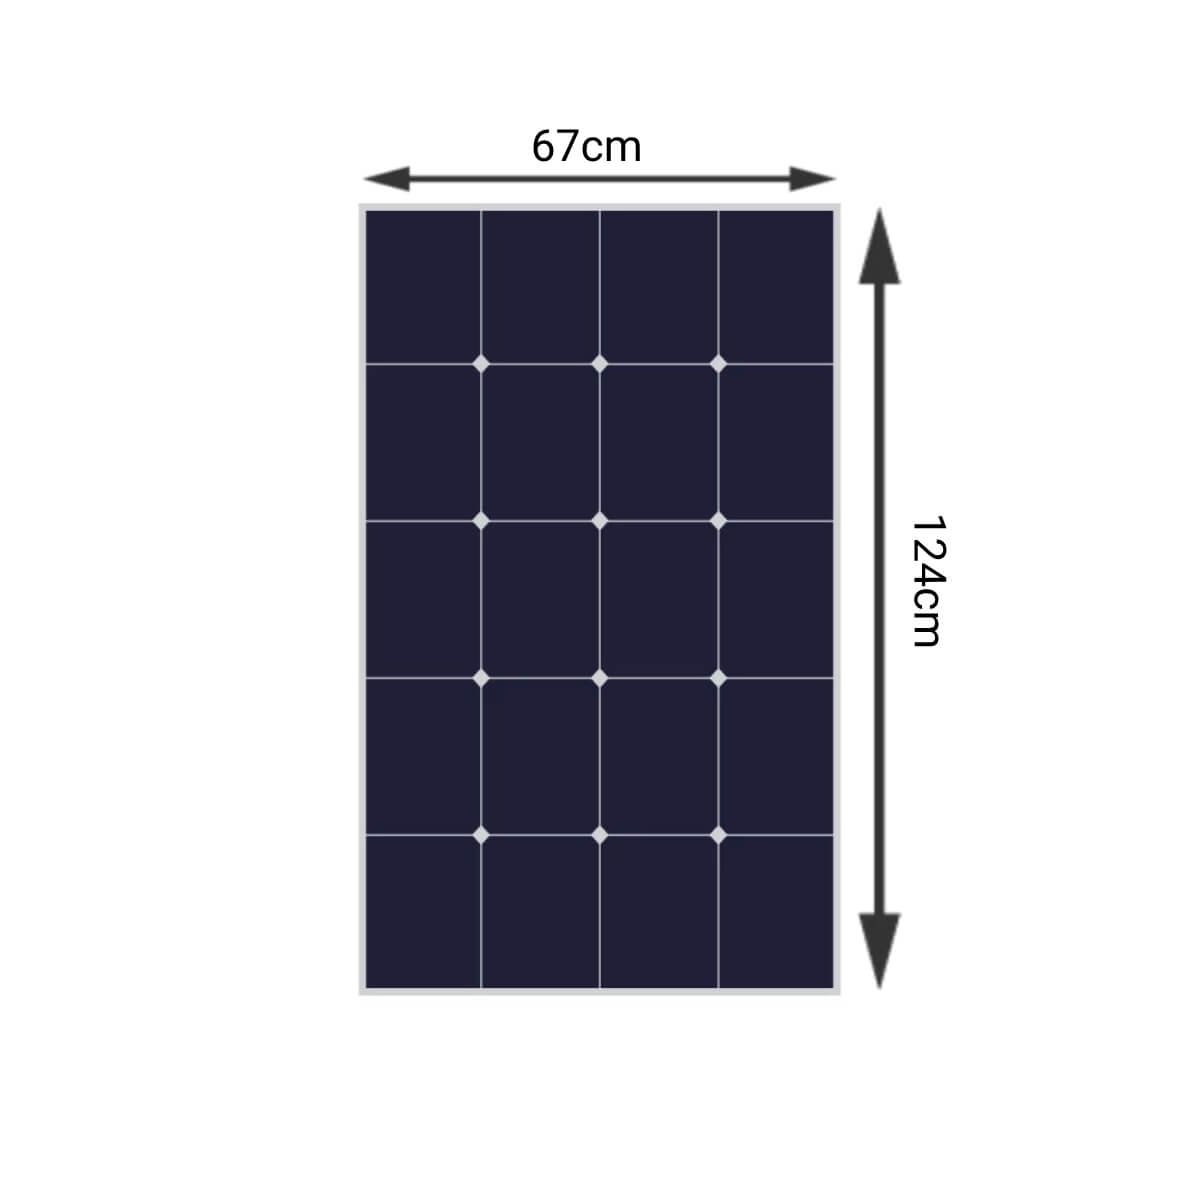 280W Solar Panel Kit – 2x 140W dimensions